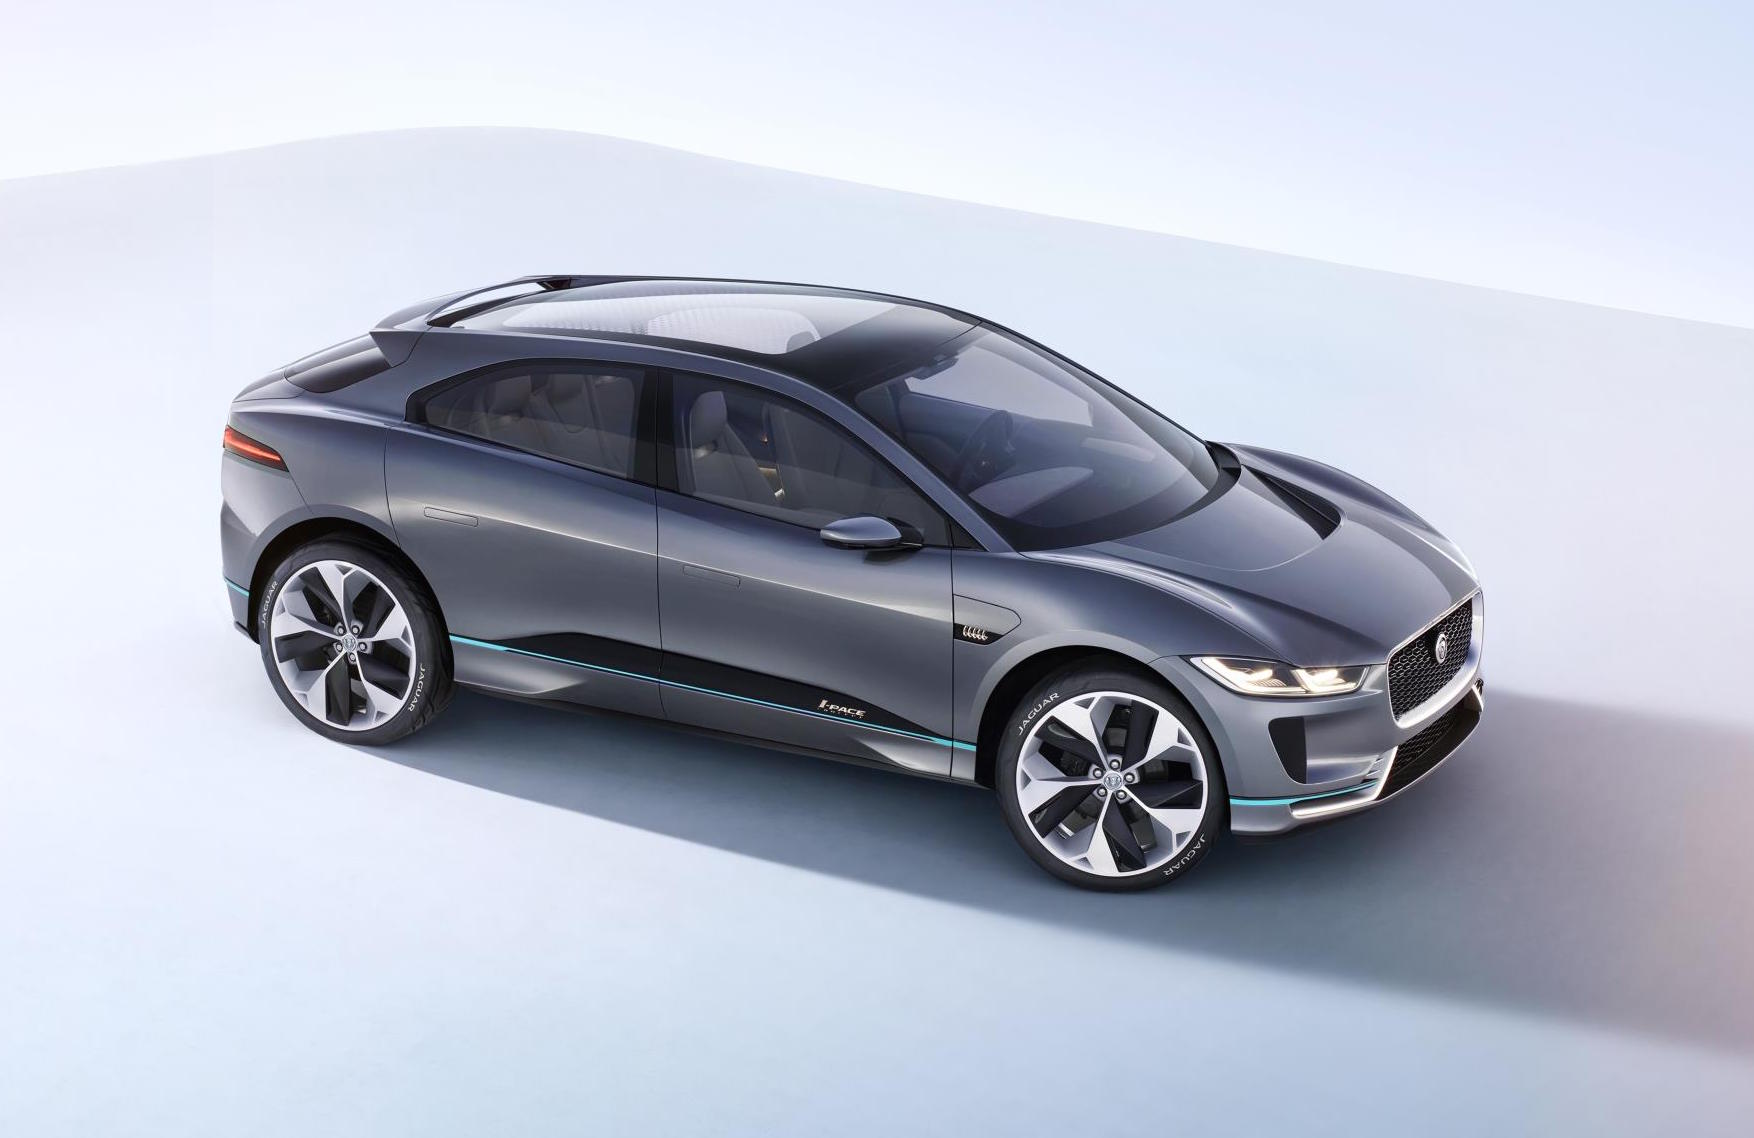 Jaguar I-PACE electric SUV revealed, on sale 2018